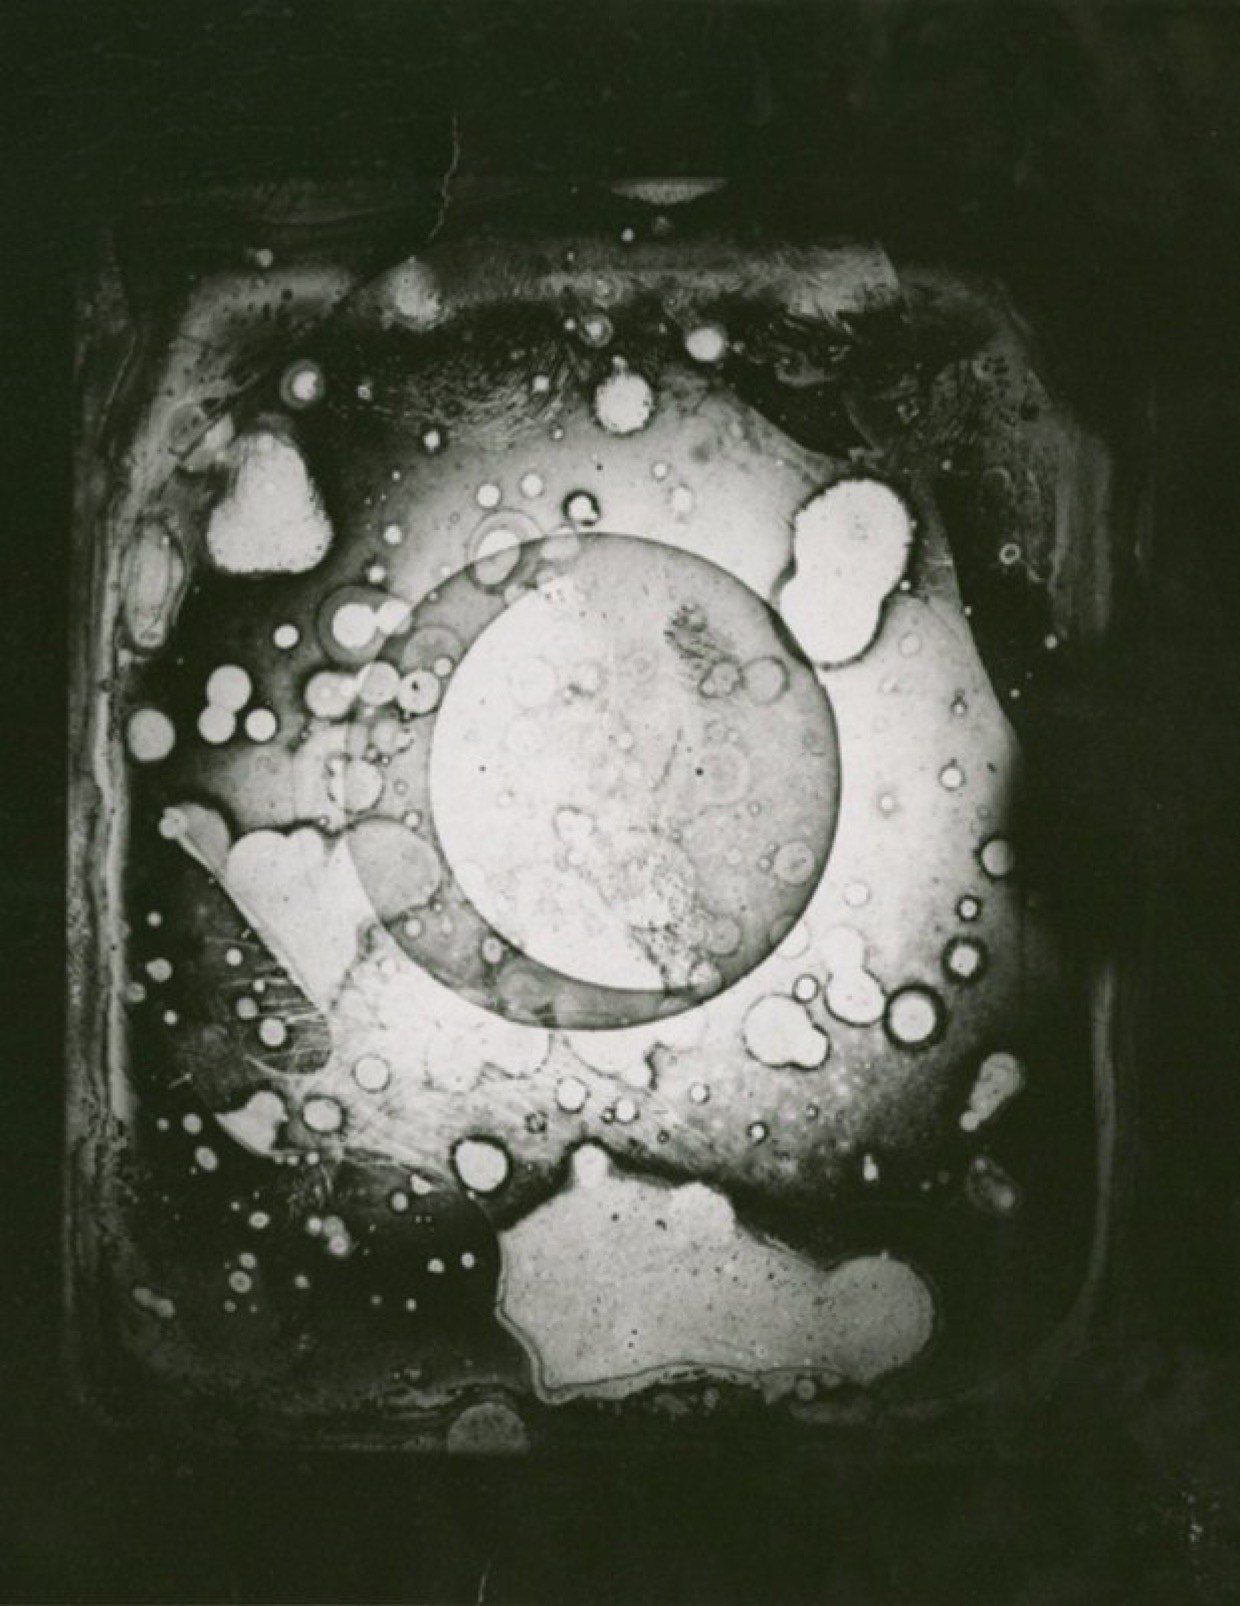 John W Draper-The first Moon Photograph 1840.jpg